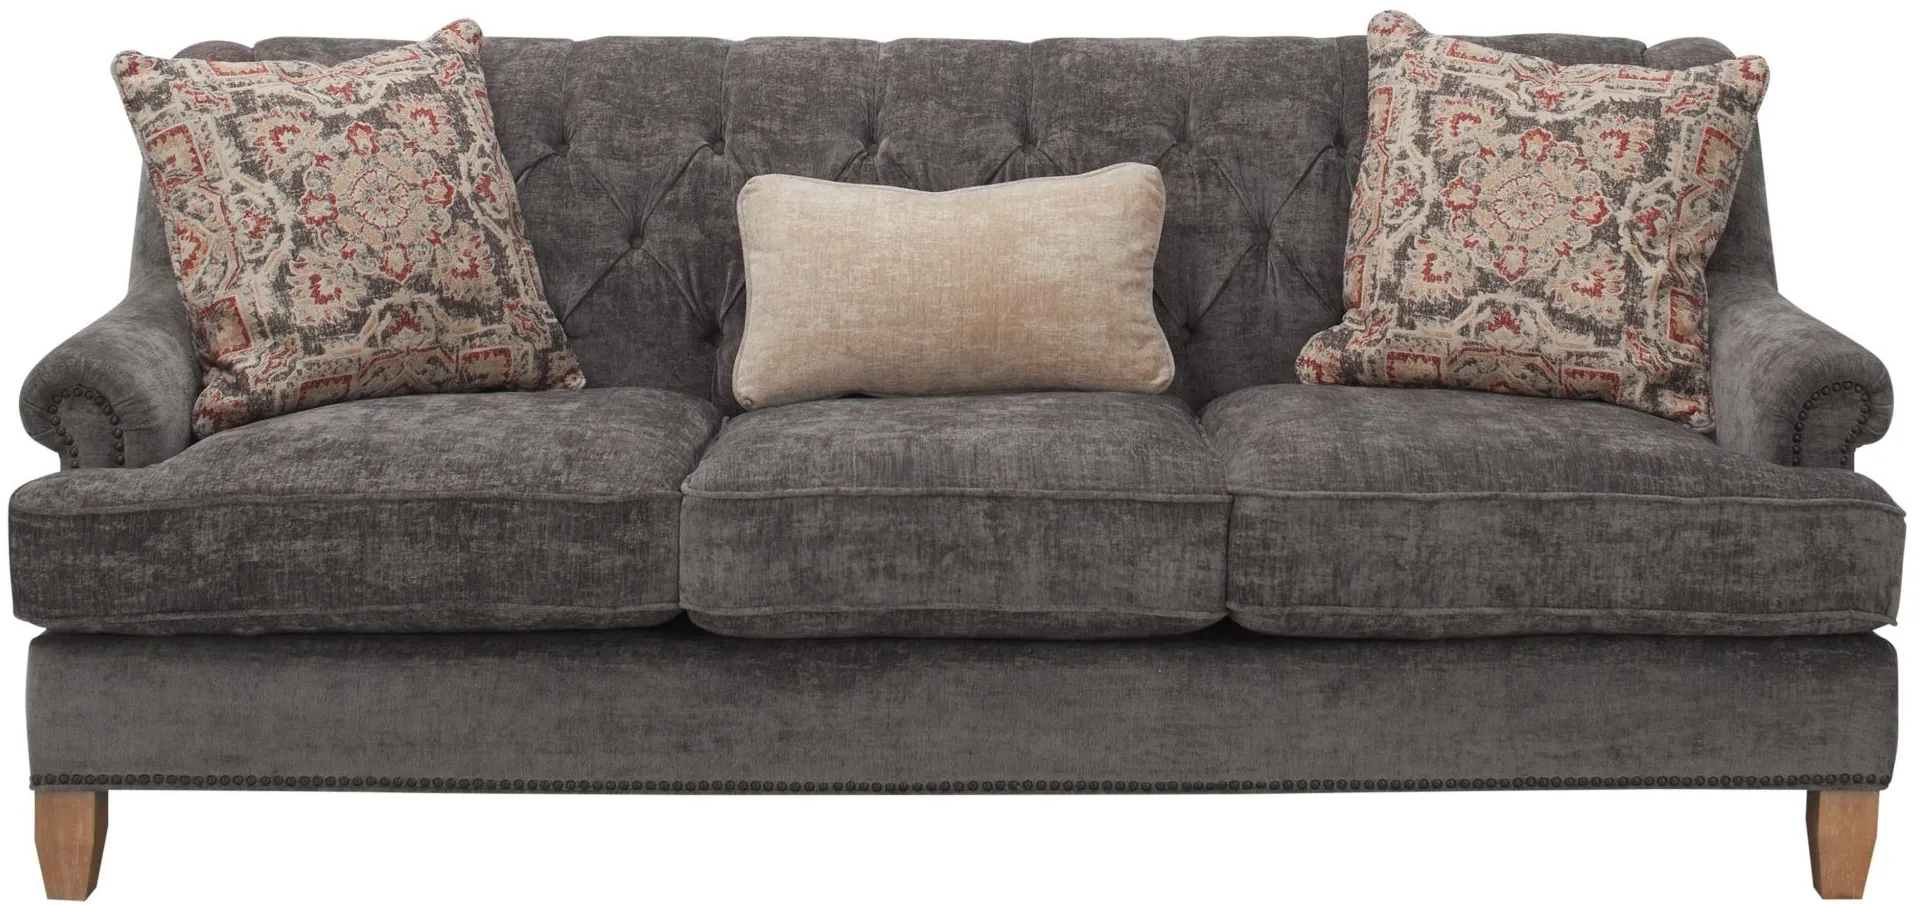 Messana Chenille Velvet Sofa in Gray by Aria Designs